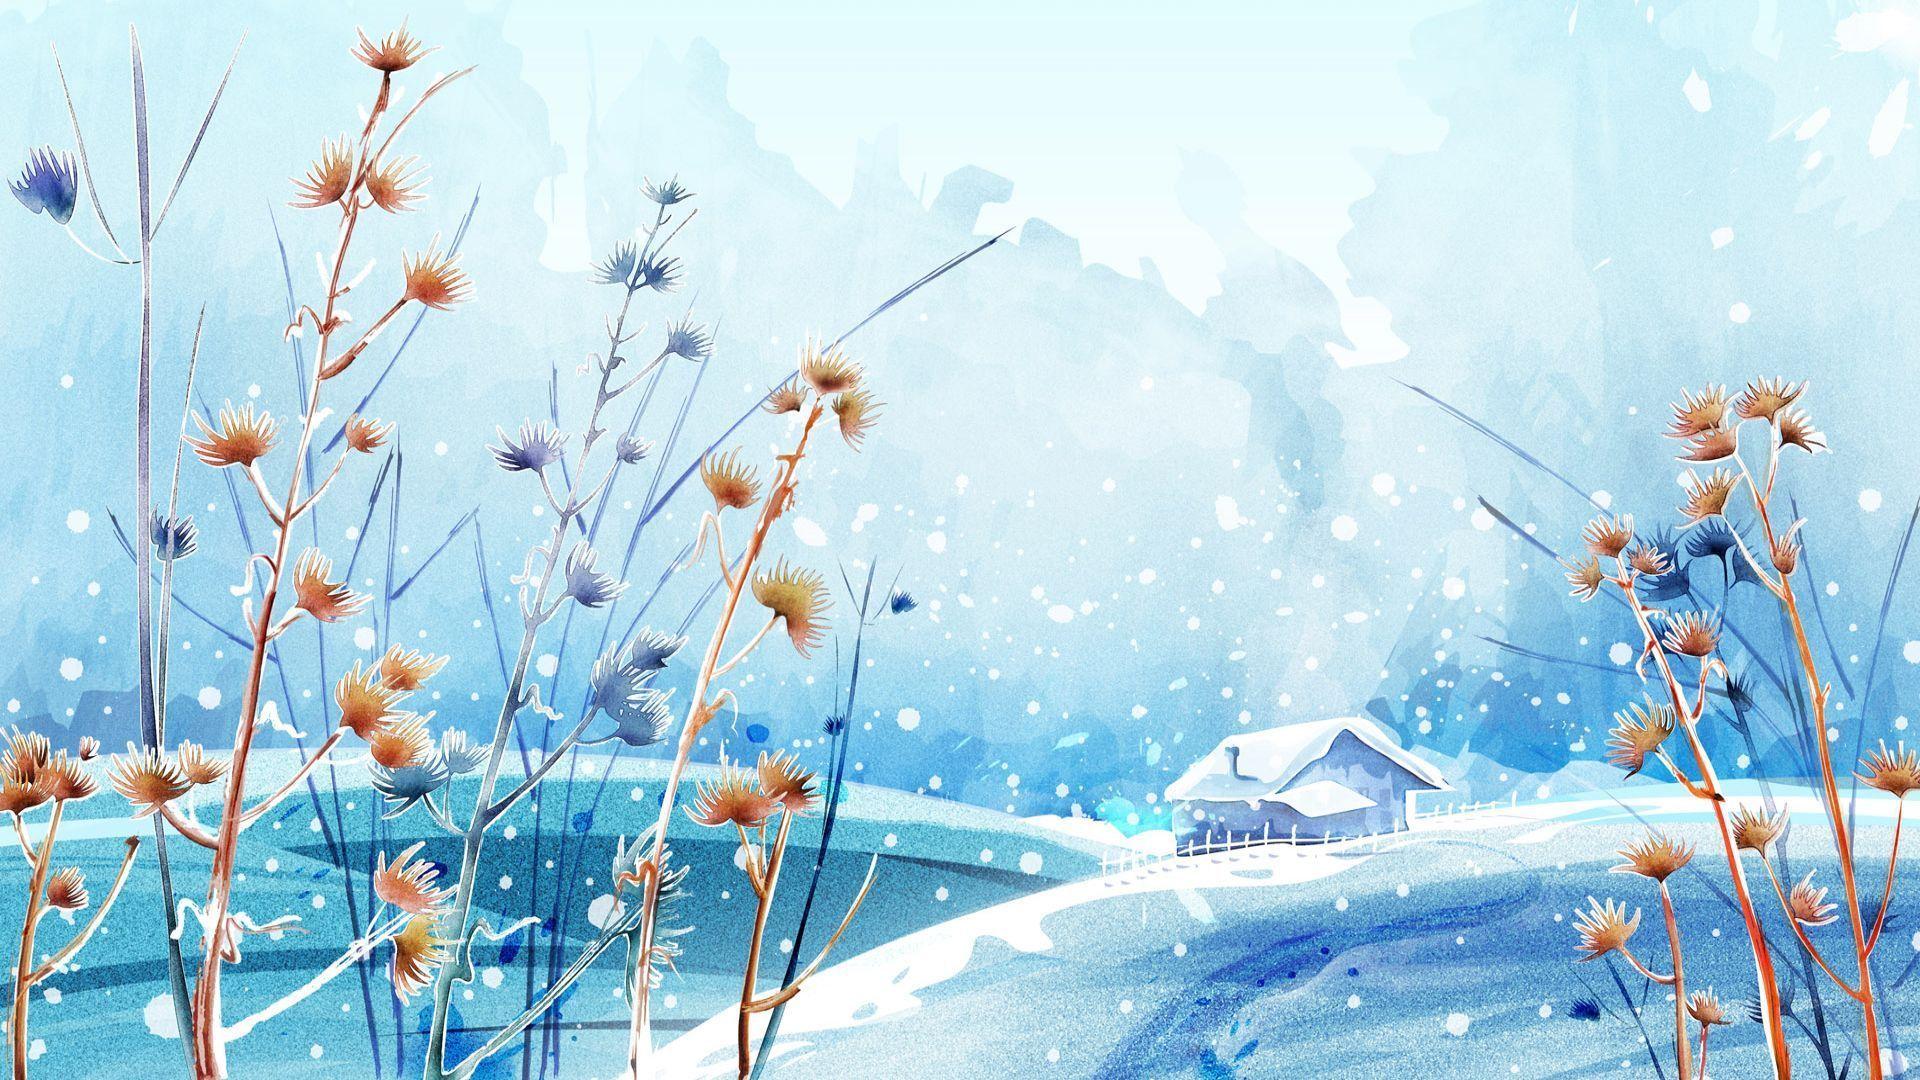 Anime Winter Scenery Wallpaper Wallpaper Background of Your Choice. Winter wallpaper, Scenery wallpaper, Winter wallpaper hd